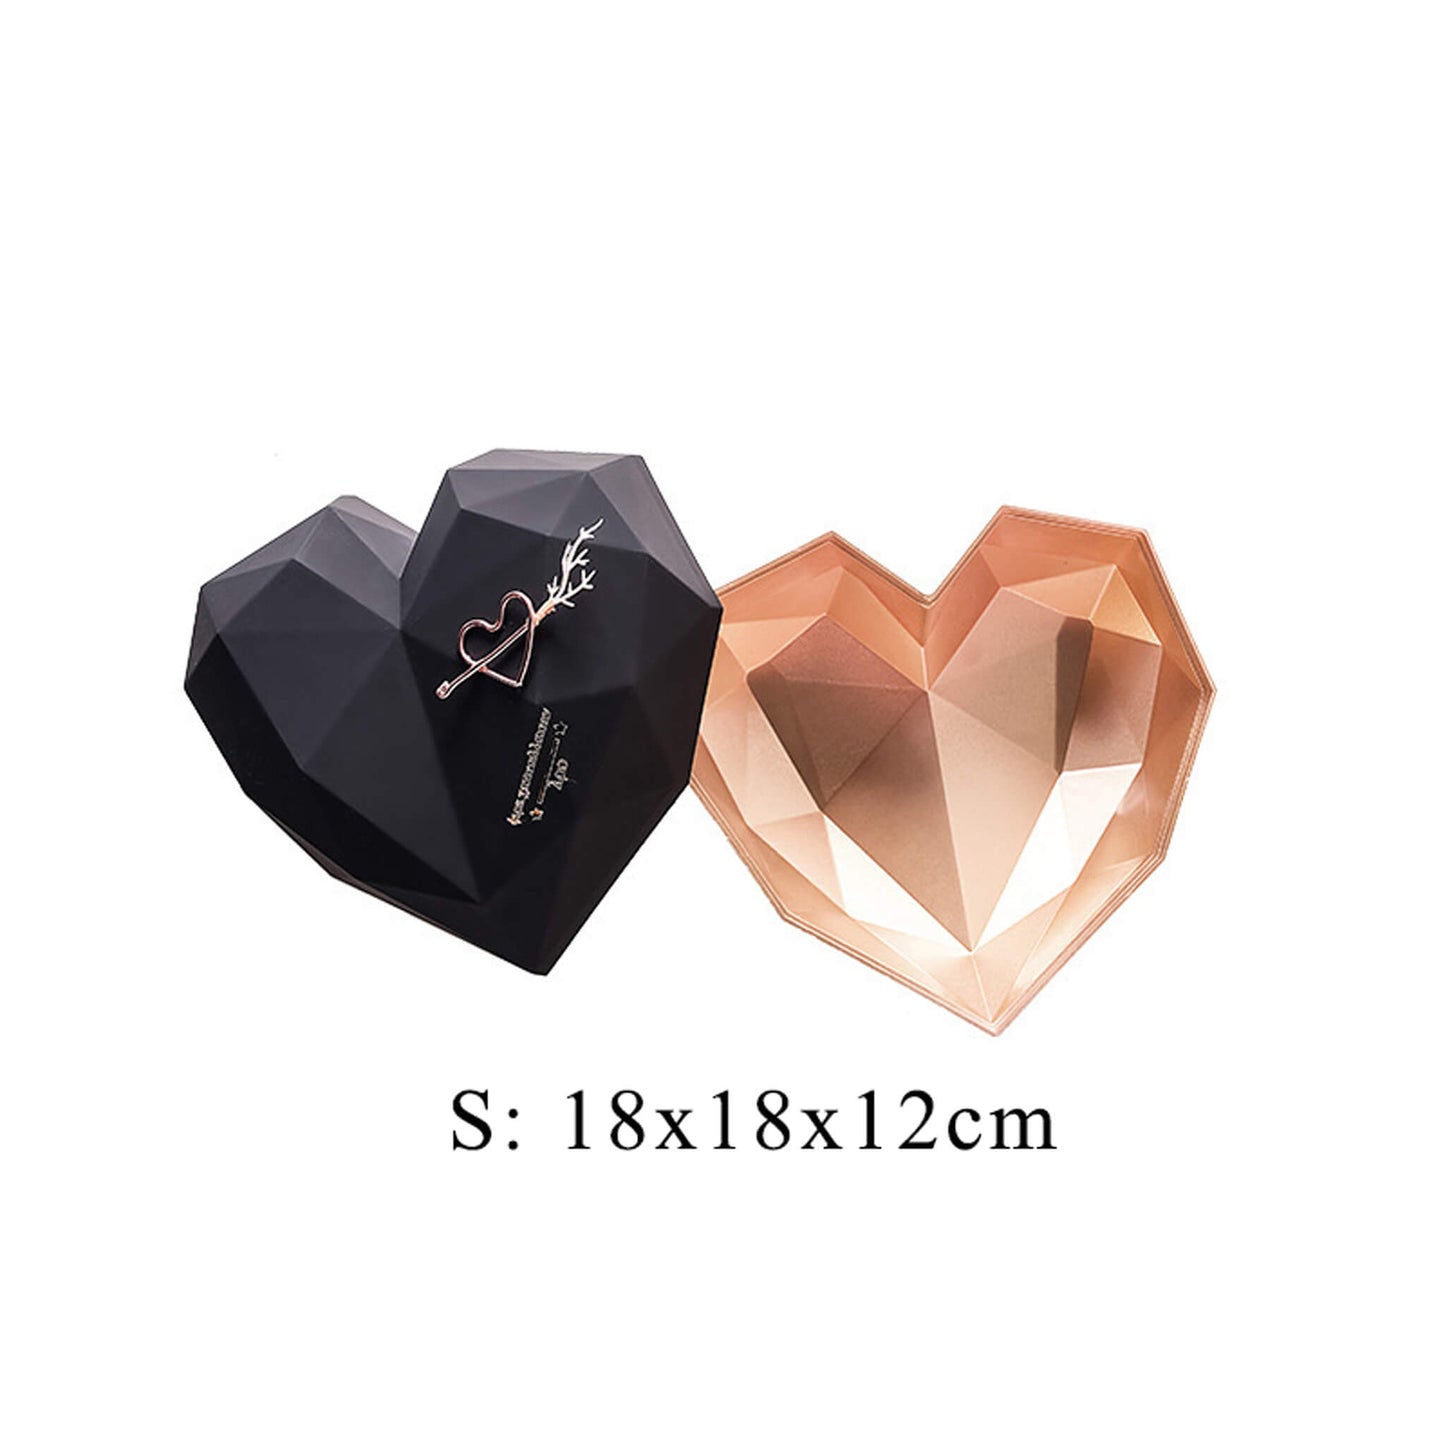 Diamond Shaped Heart Flower Gift Boxes For Arrangements